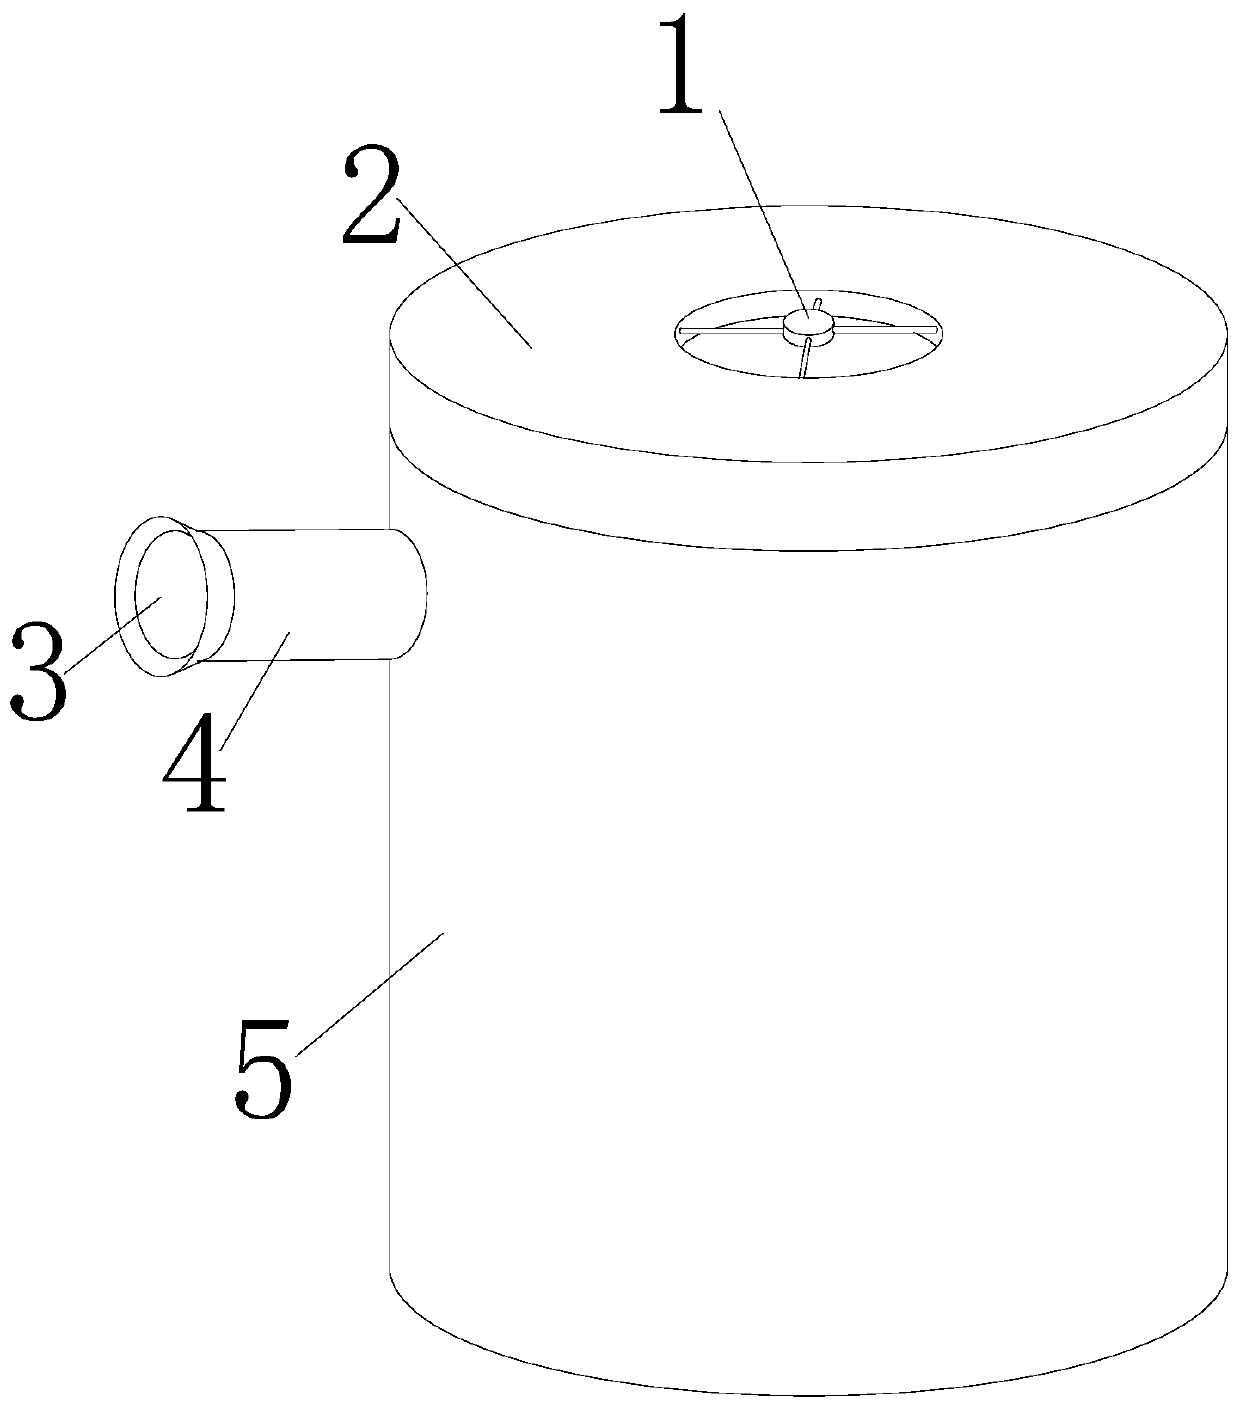 Water vapor separation device for water dispenser